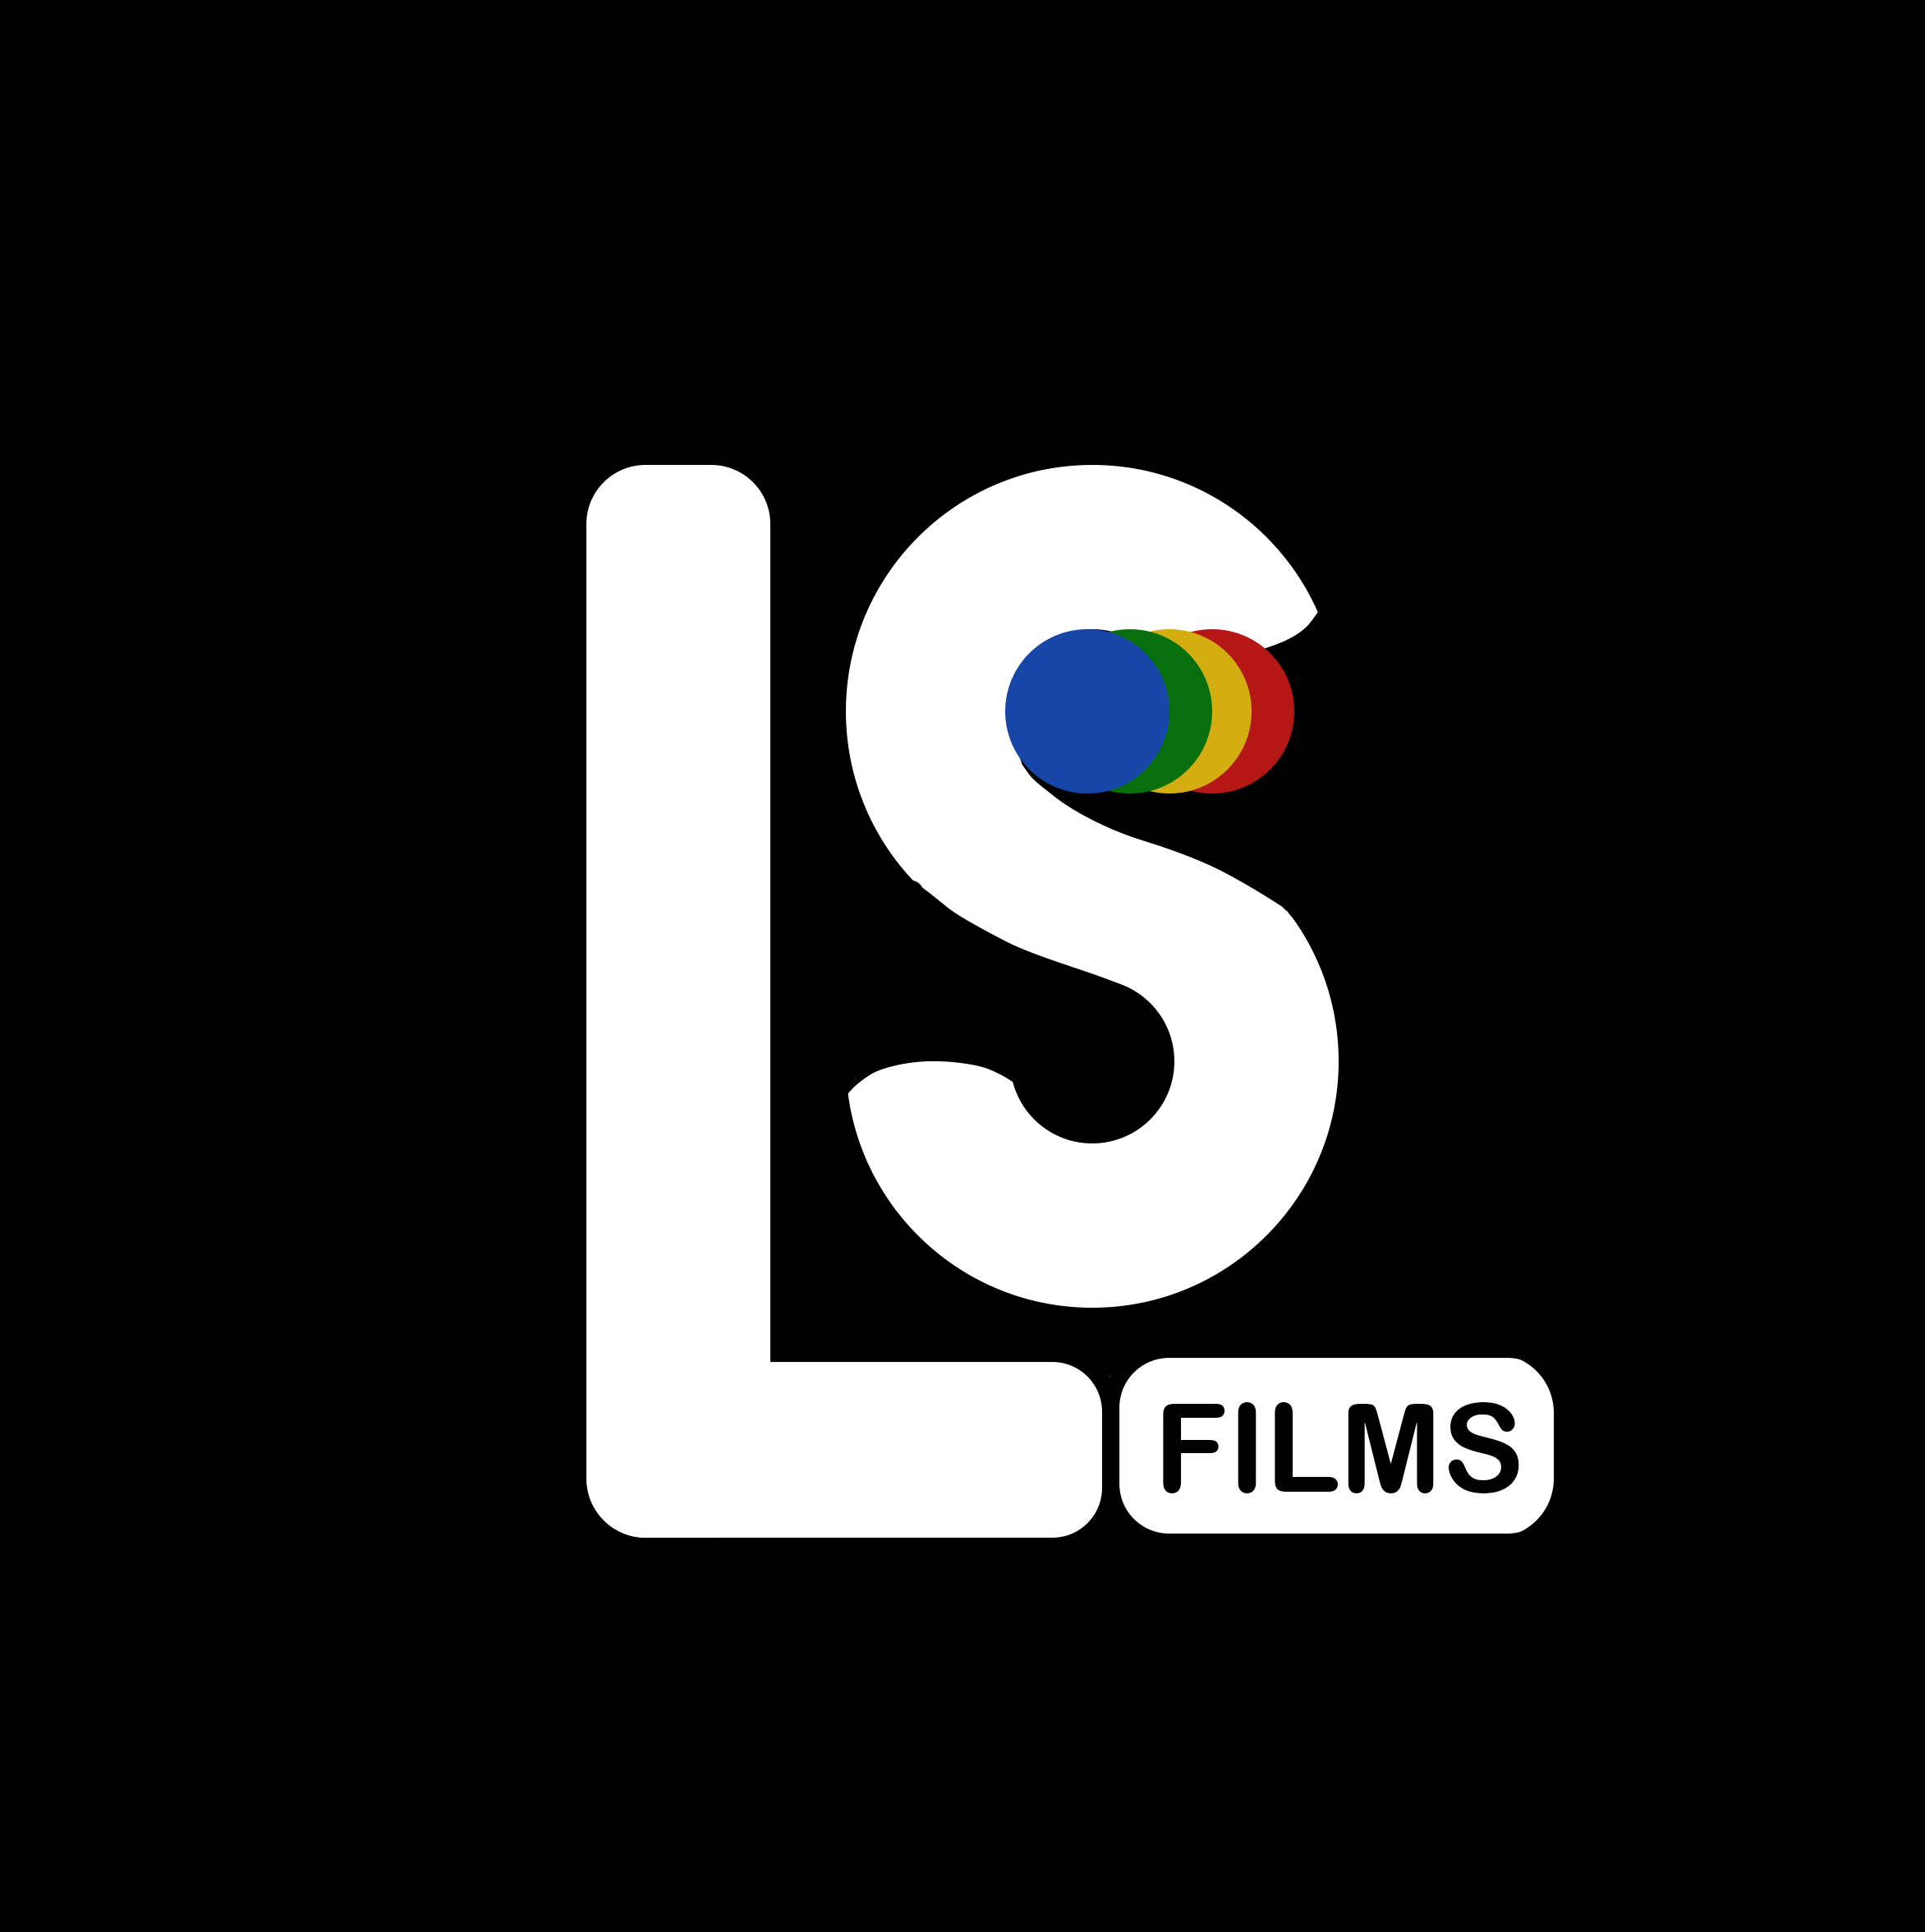 LS-FILMS LOGO